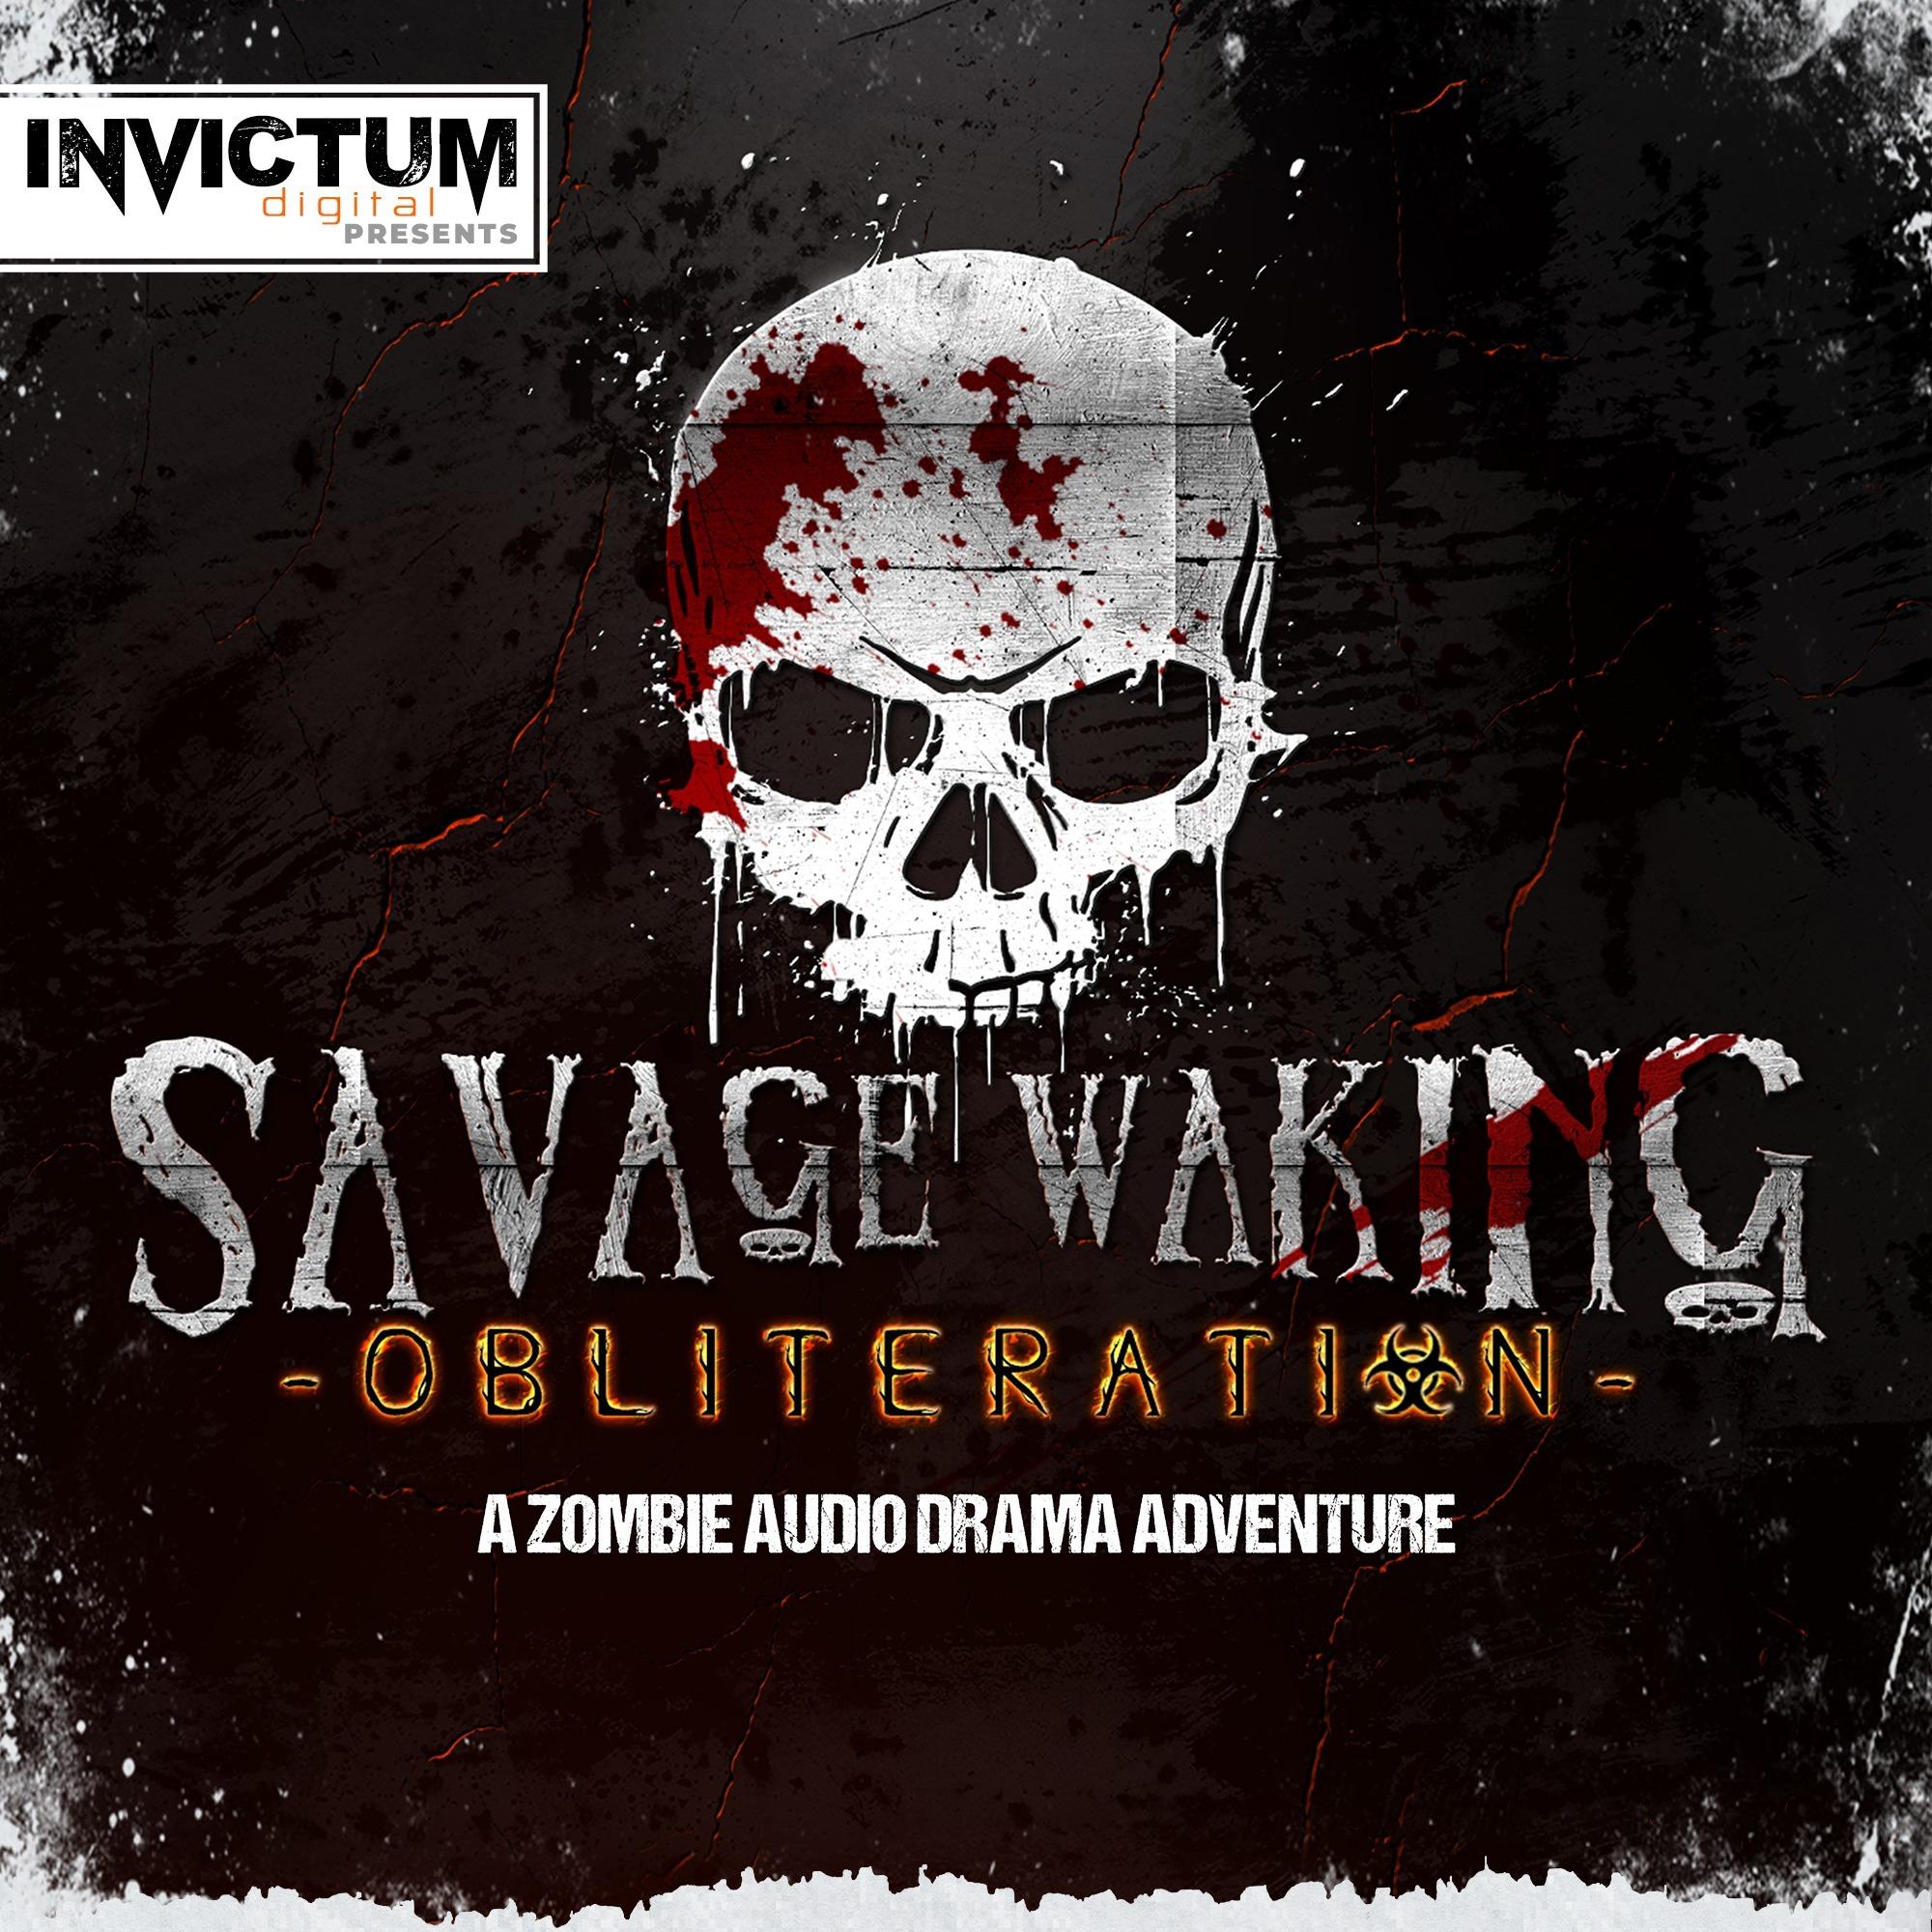 Invictum Digital Presents Savage Waking: Obliteration